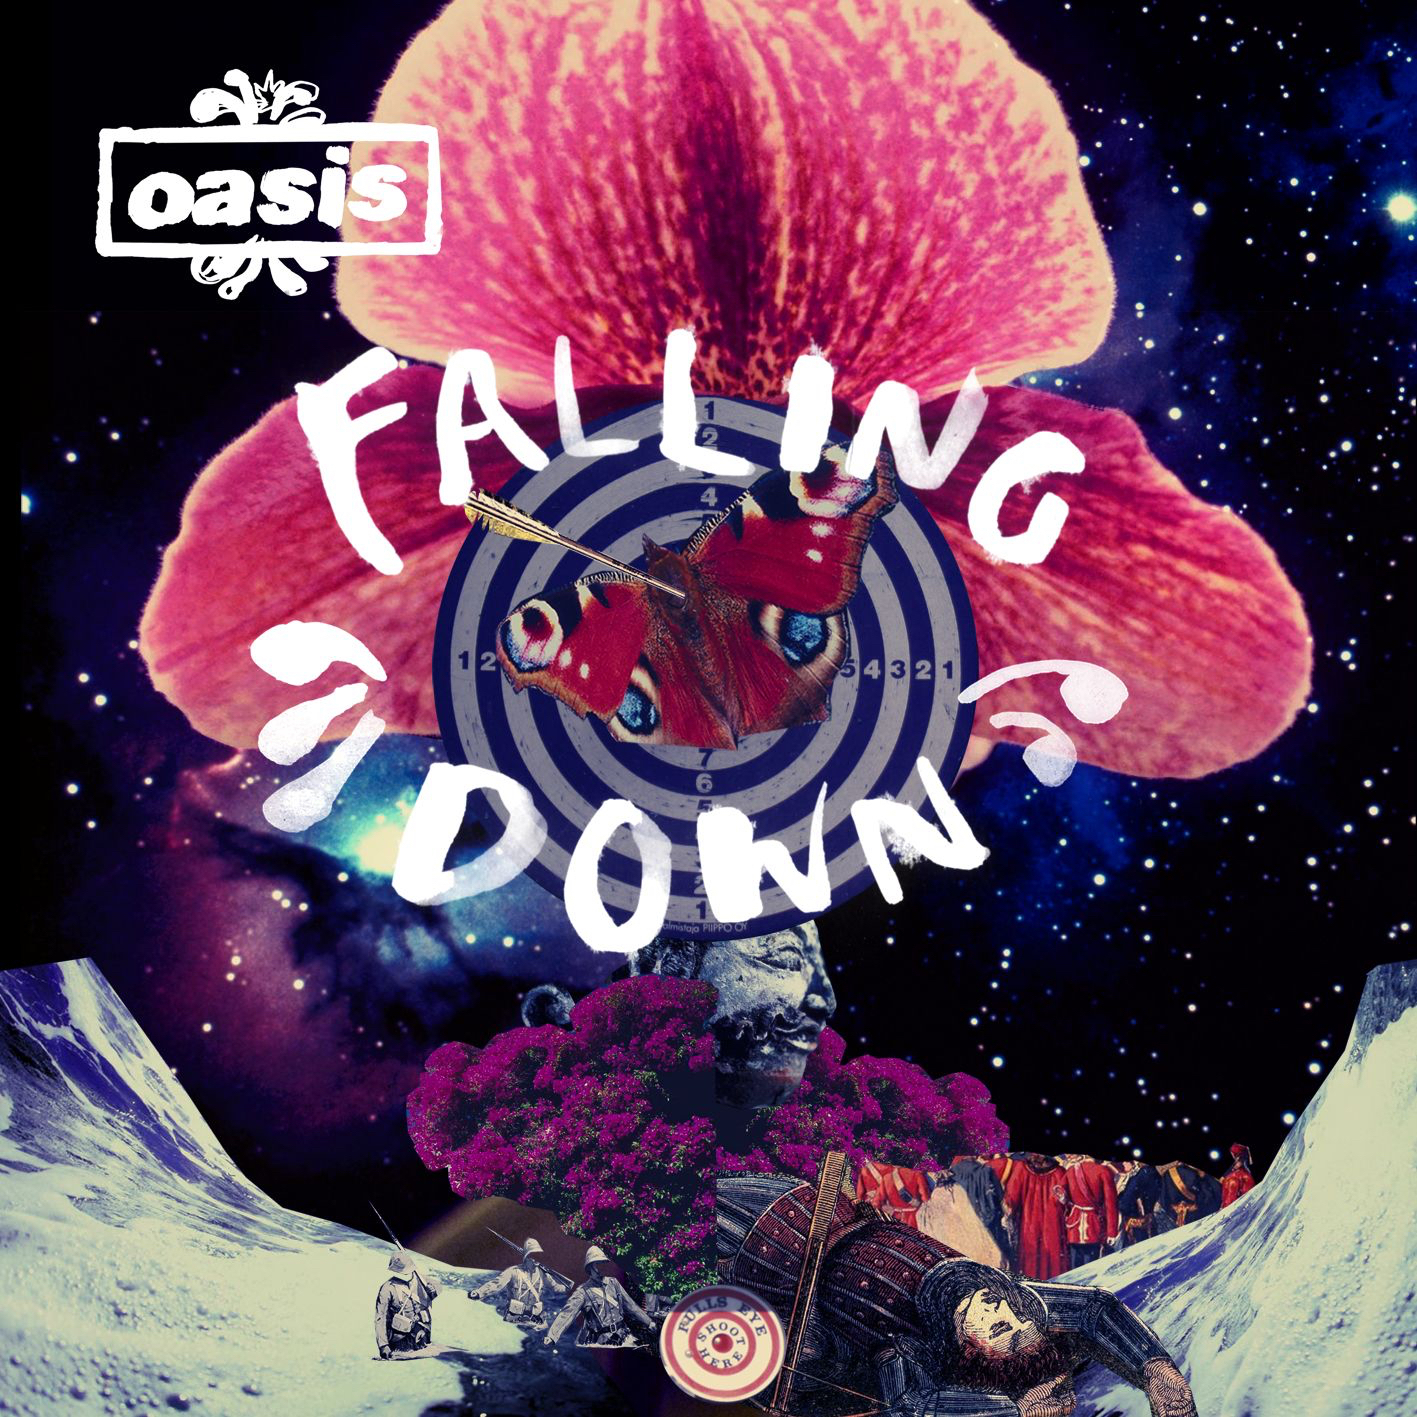 oasis (オアシス) シングル『FALLING DOWN (フォーリング・ダウン)』(2009年5月27日発売) 高画質CDジャケット画像 (ジャケ写)